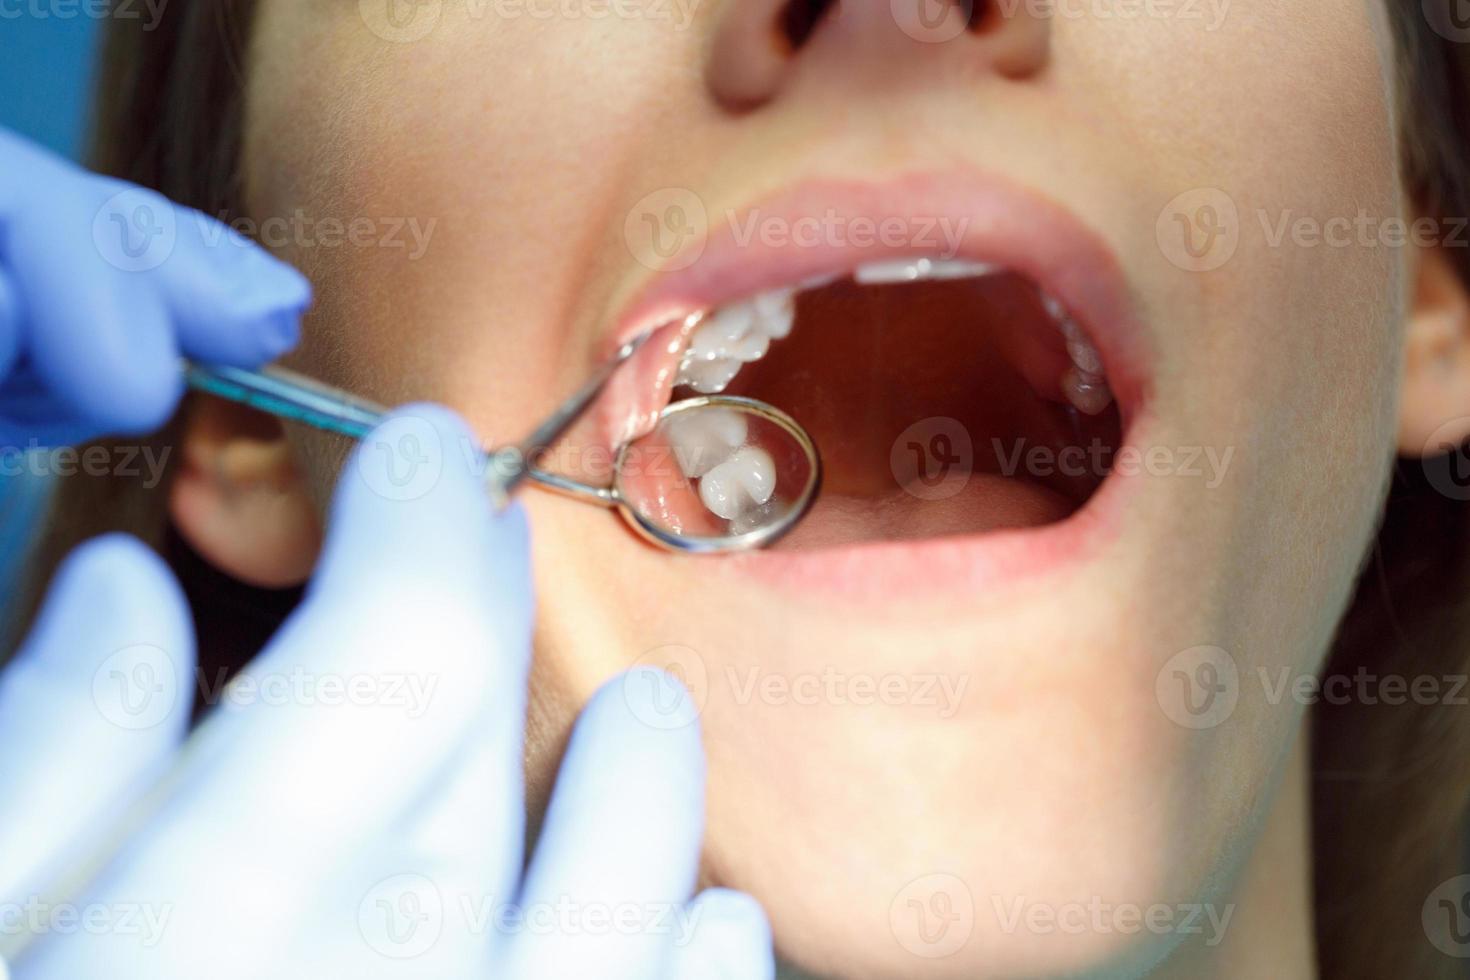 kvinna få en dental behandling foto